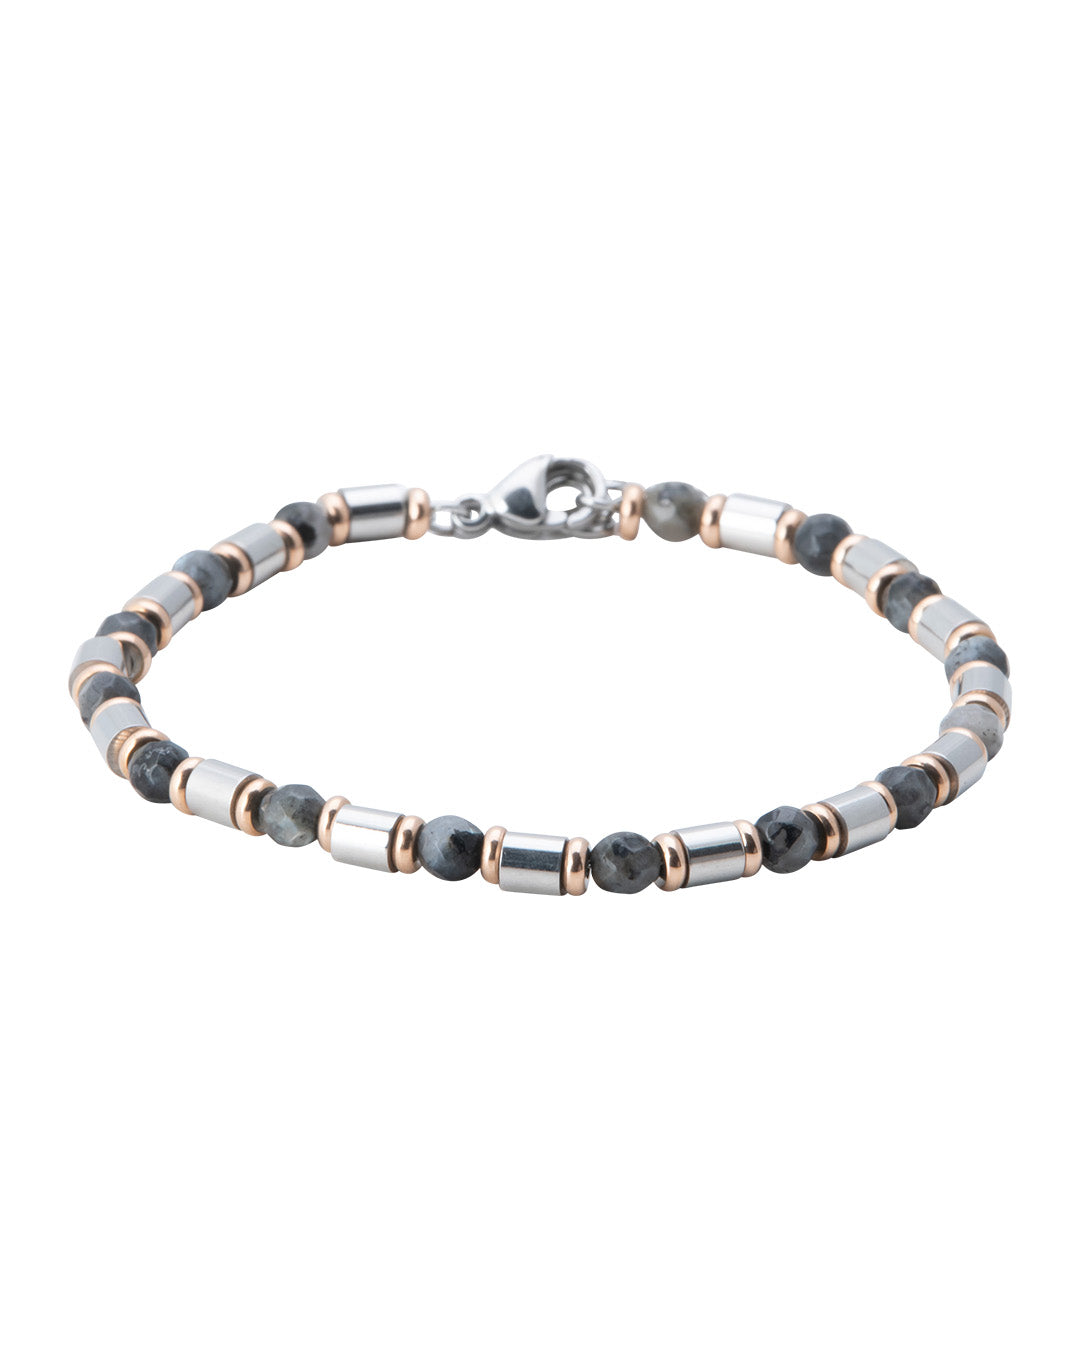 Stainless Steel & Grey Labradorite Stone Bead Bracelet